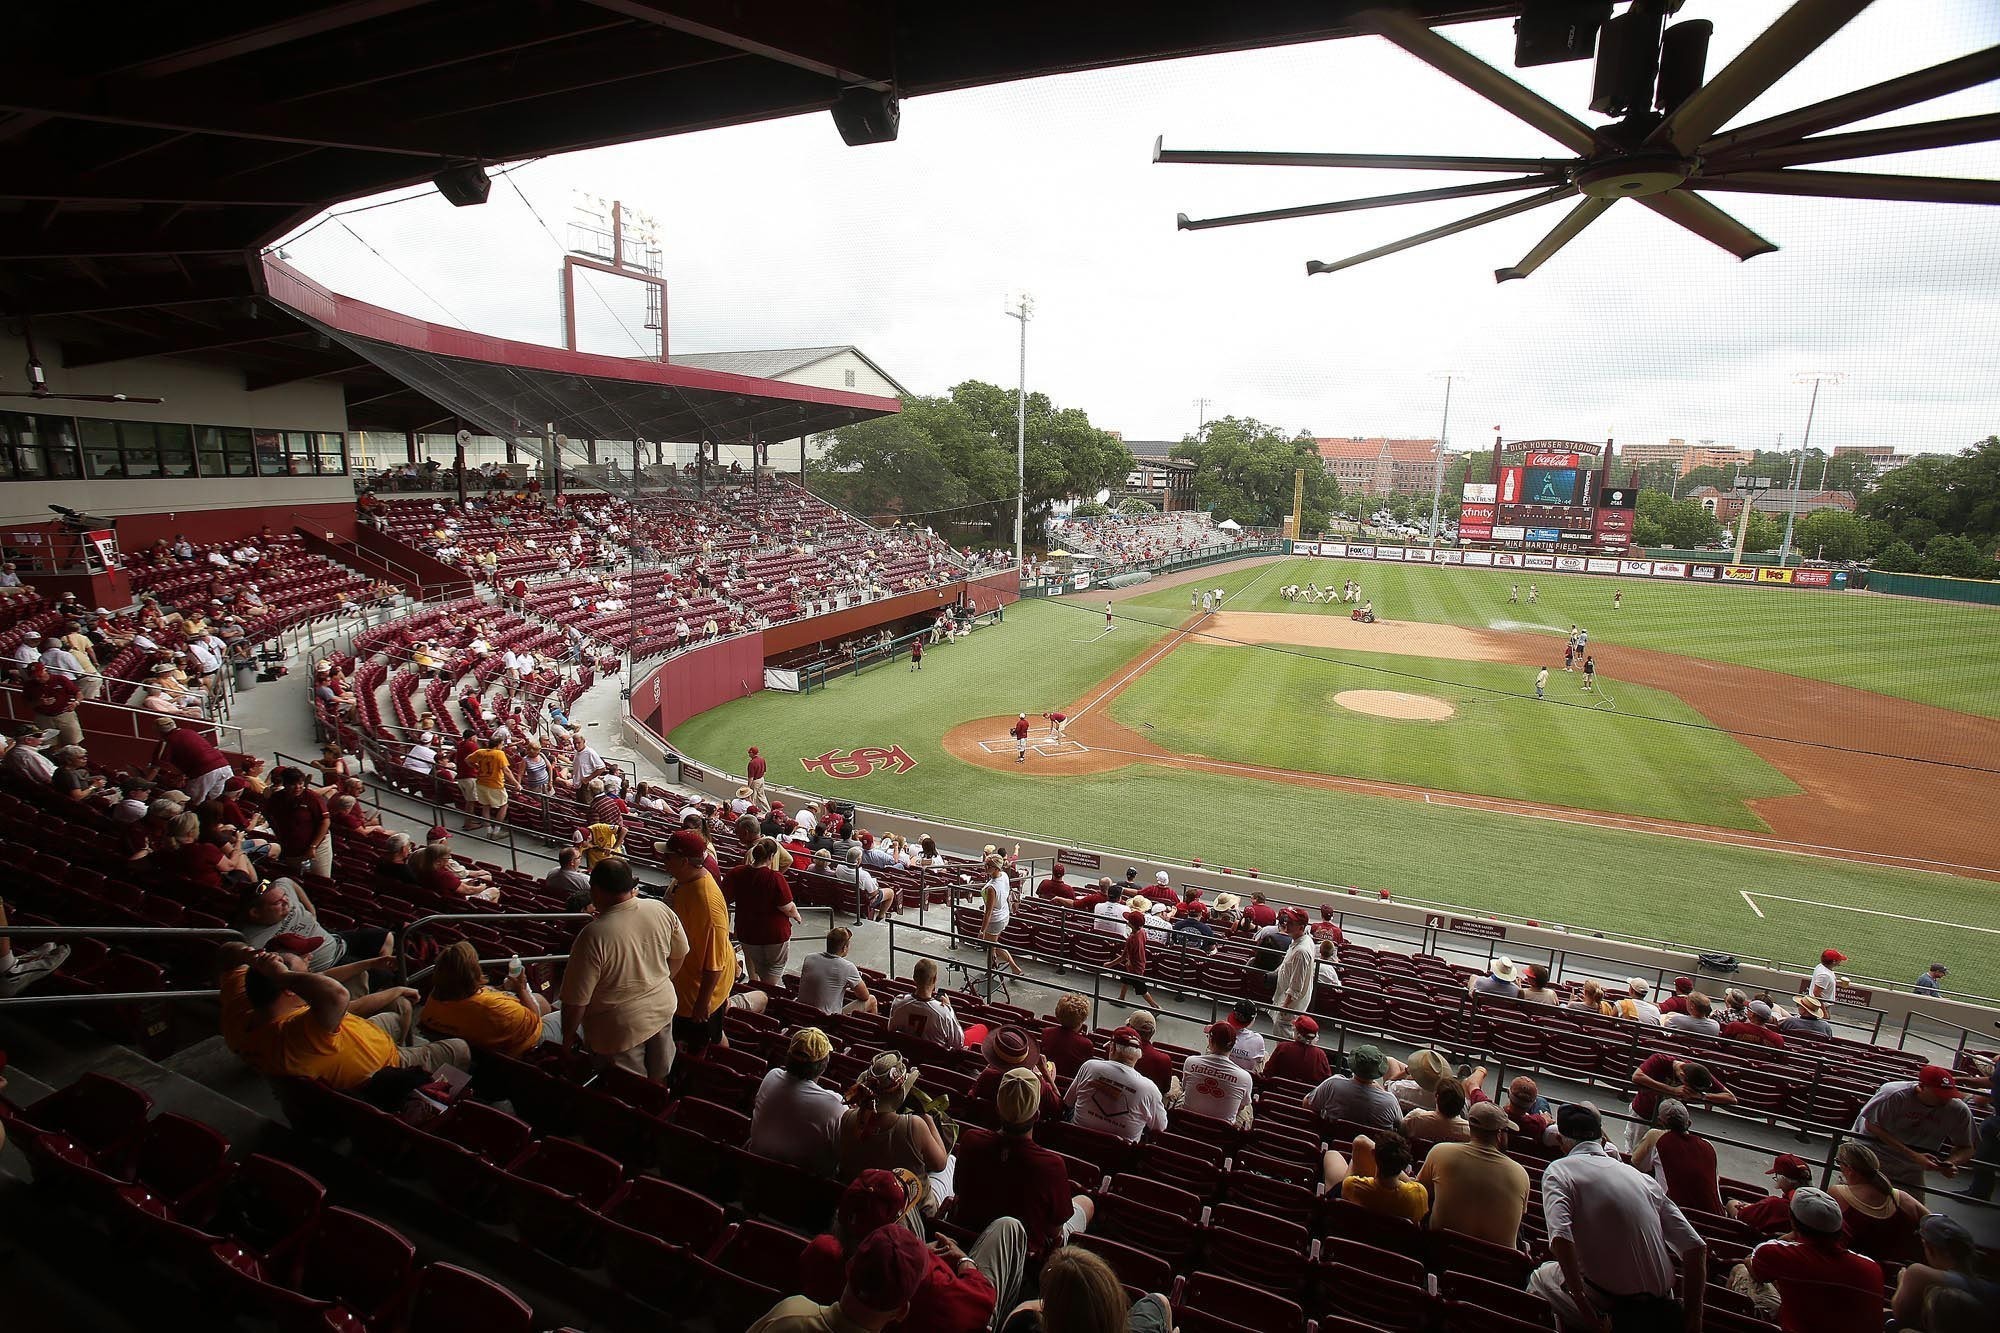 Florida State to sell beer at baseball games - Orlando Sentinel